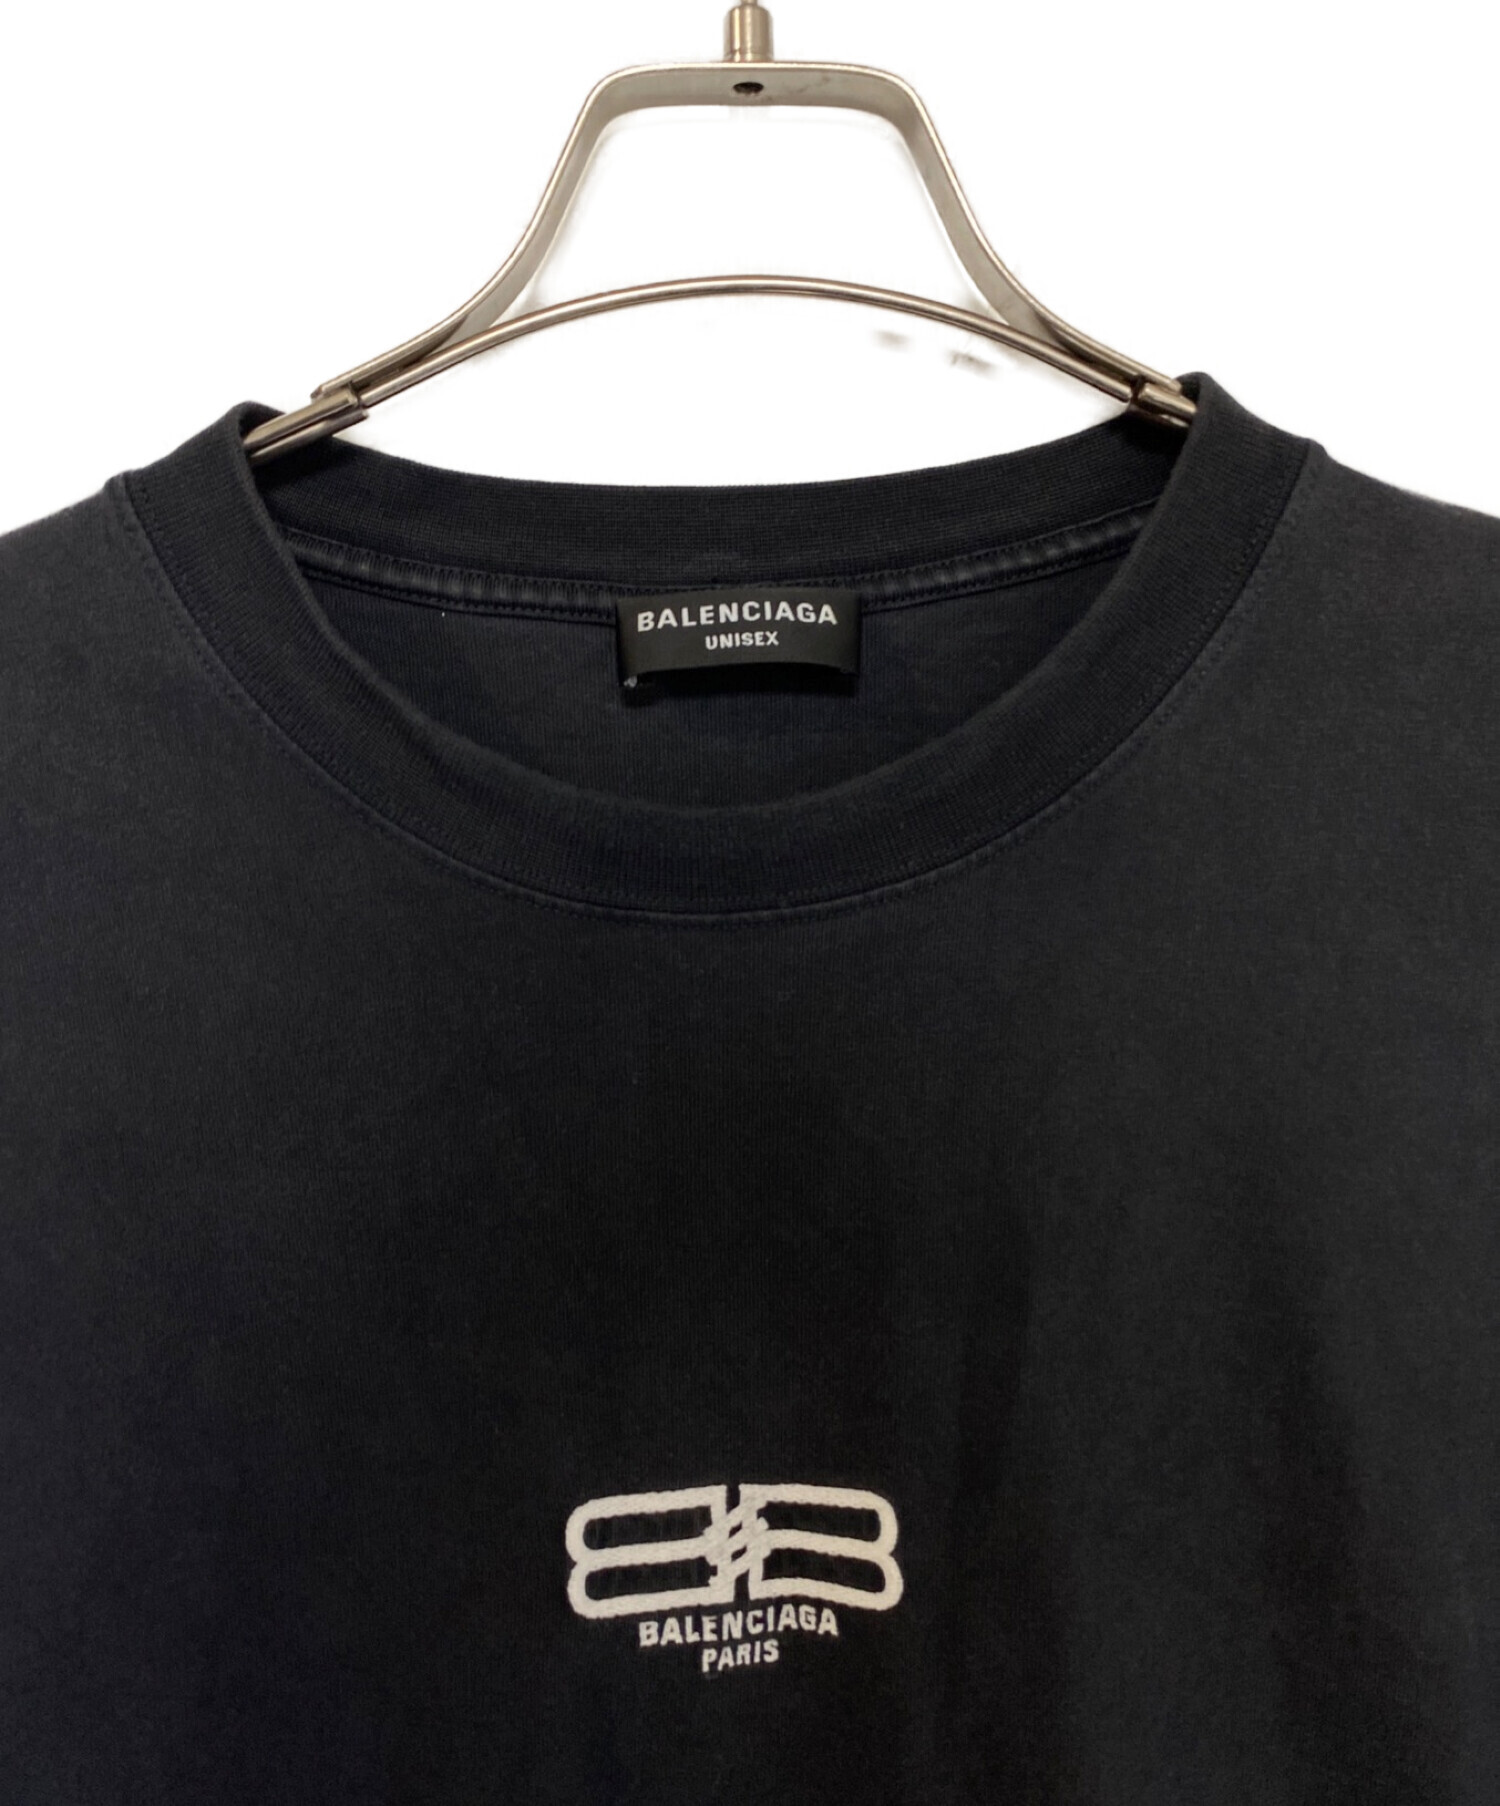 BALENCIAGA (バレンシアガ) BB PARIS ICON Tシャツ ブラック サイズ:XL